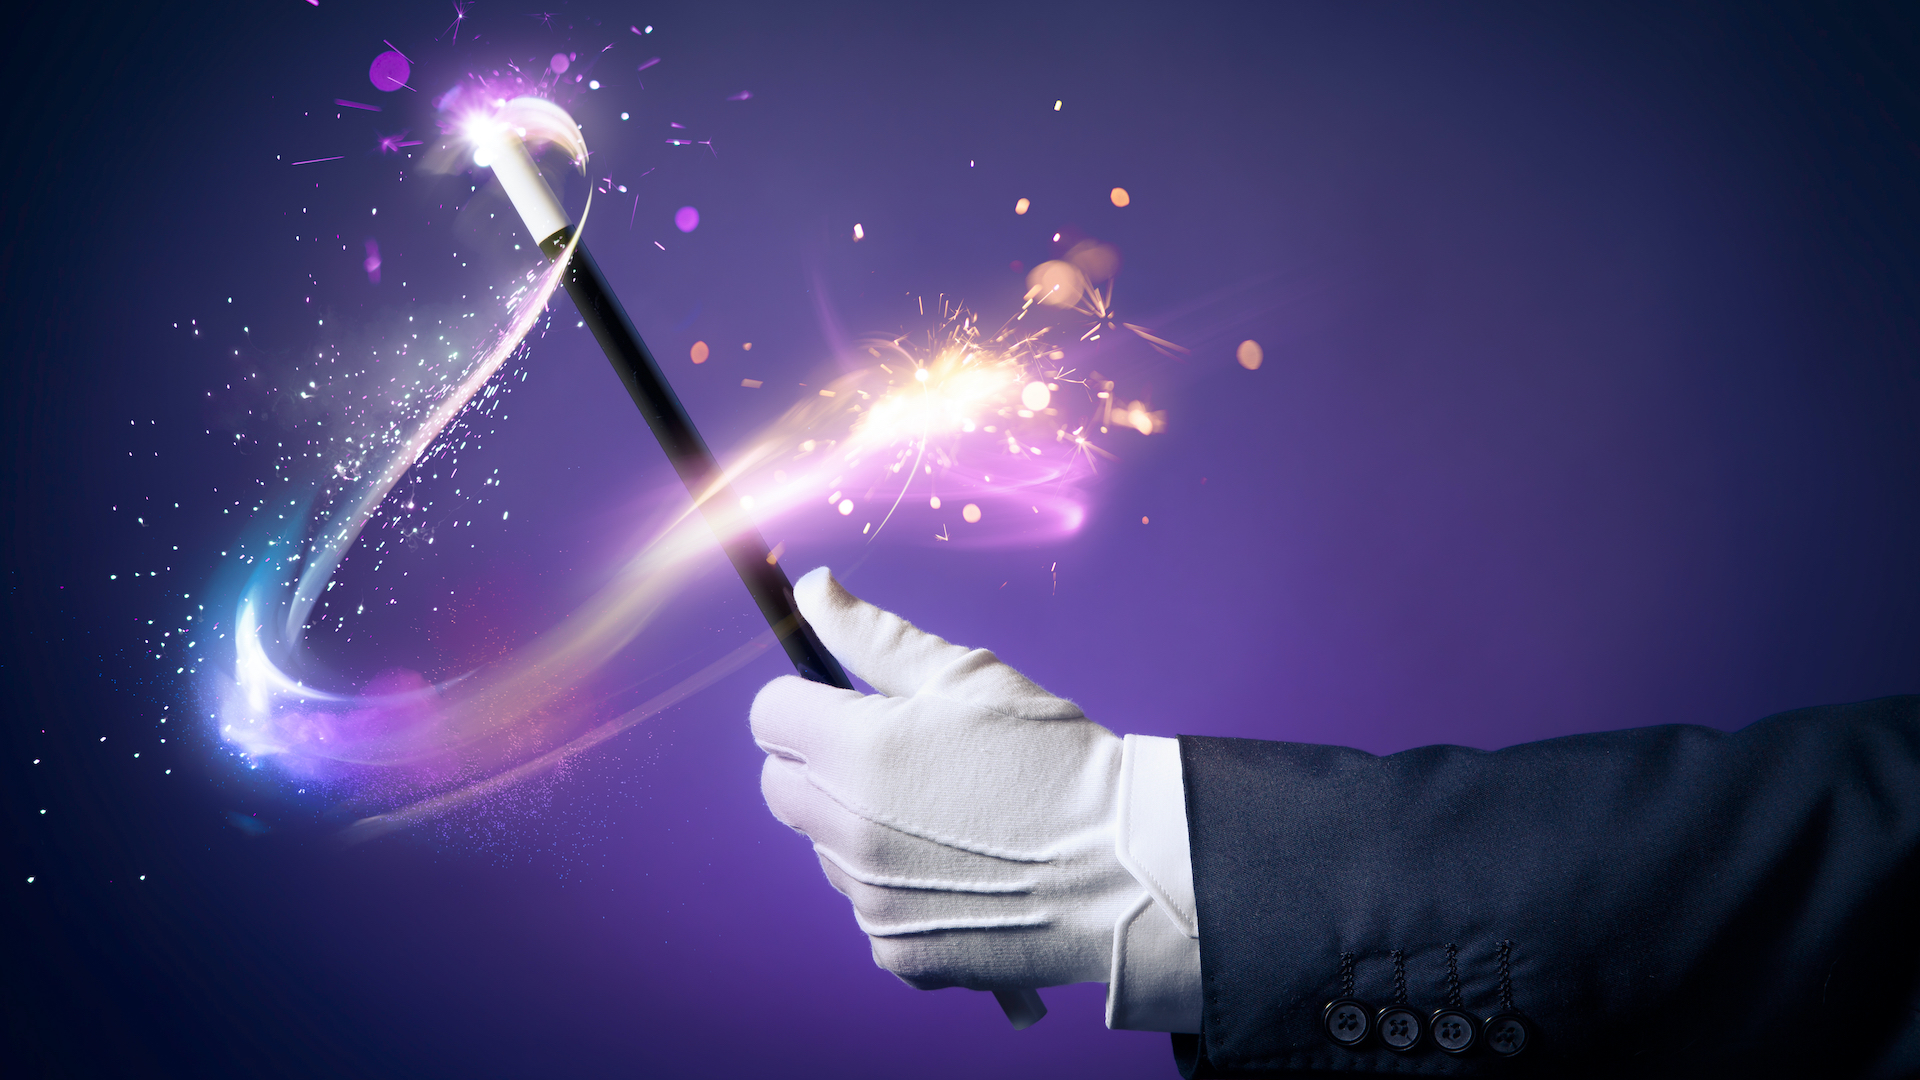 A magician's wand